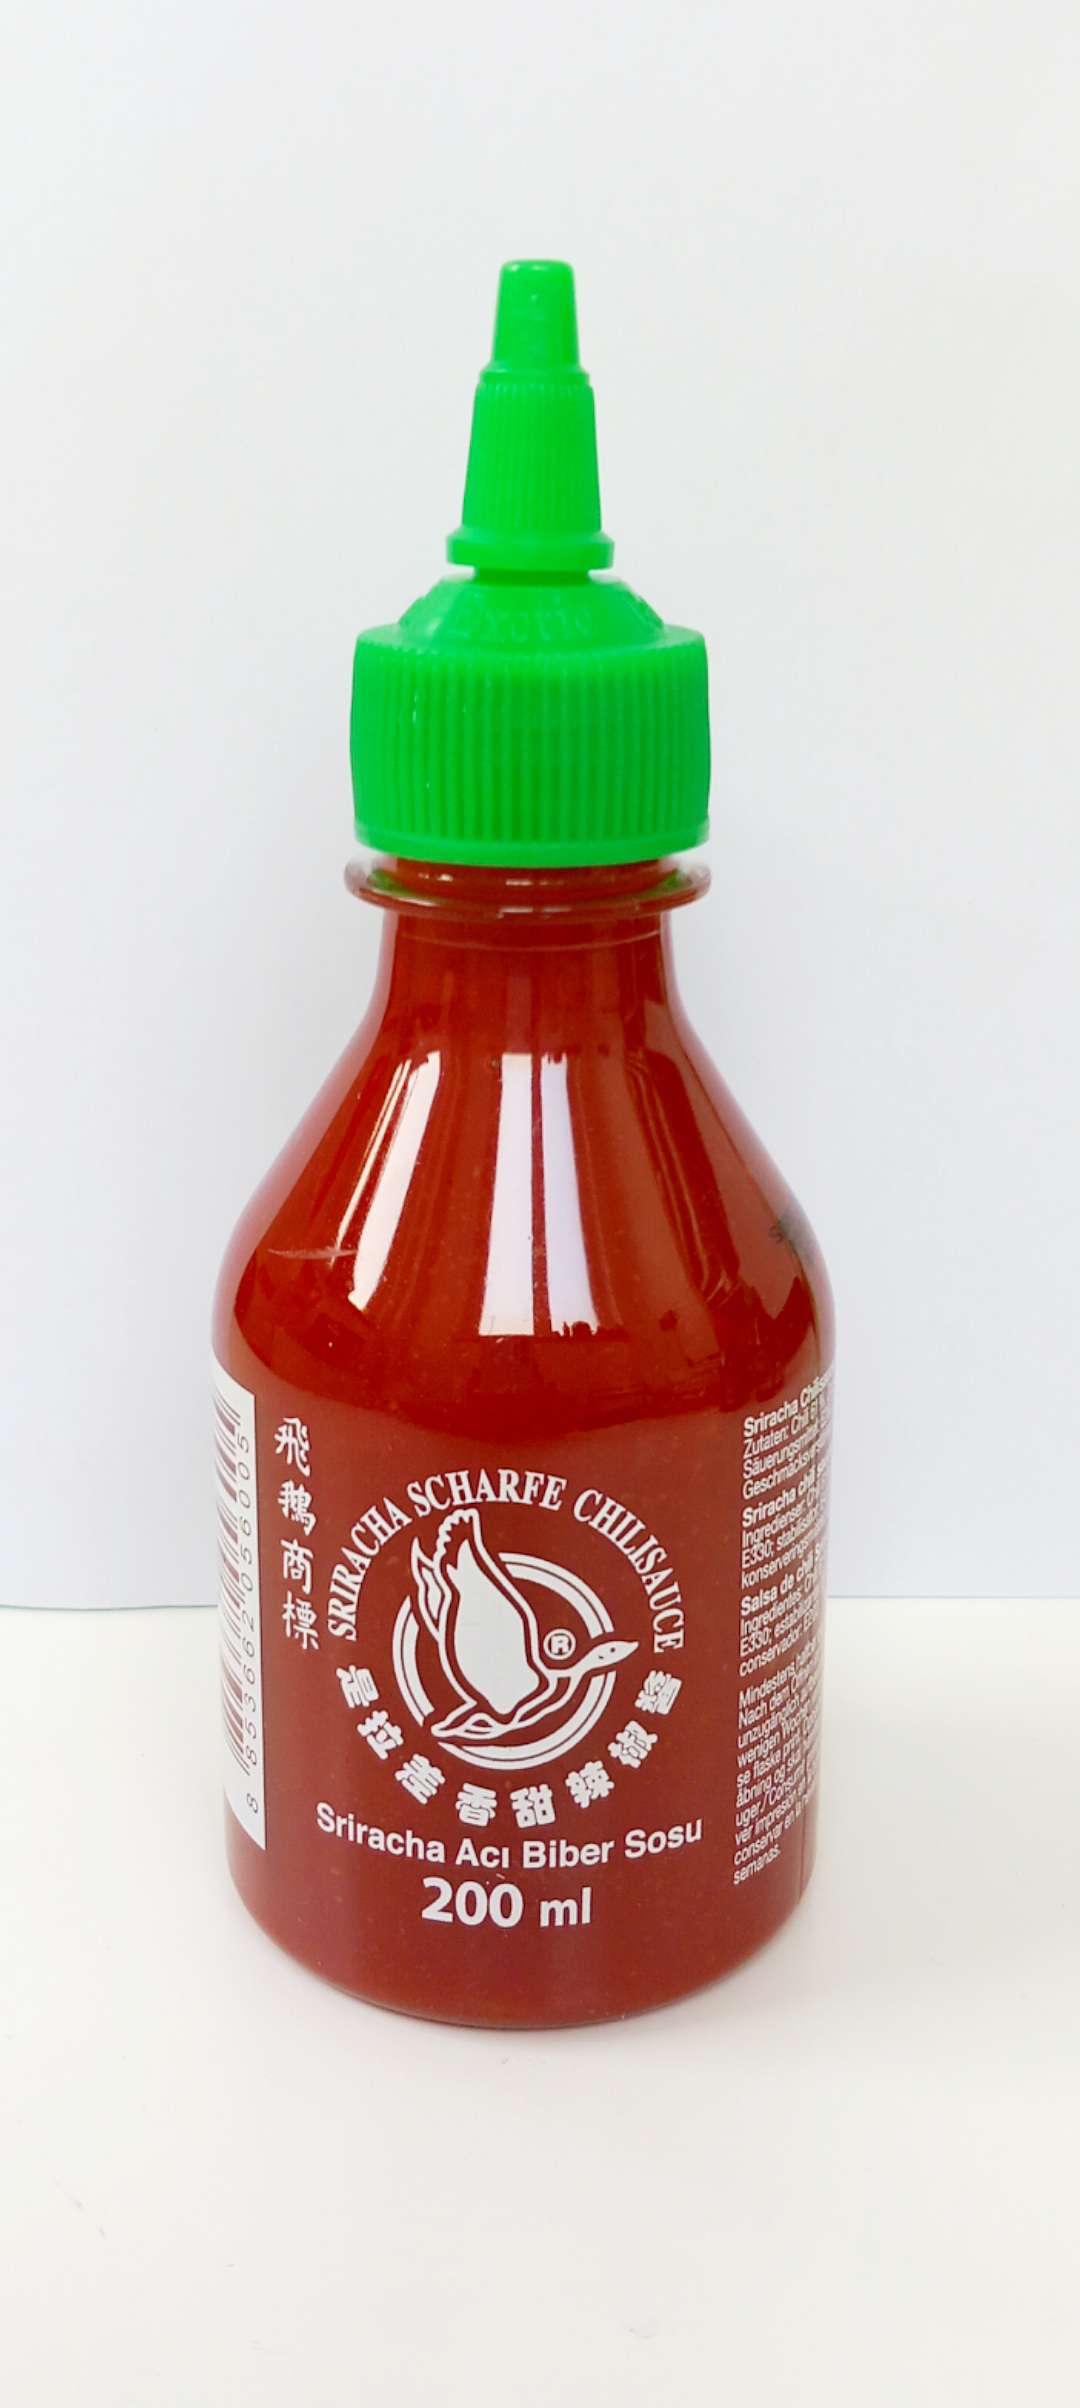 Sriracha Chilisauce 200ml